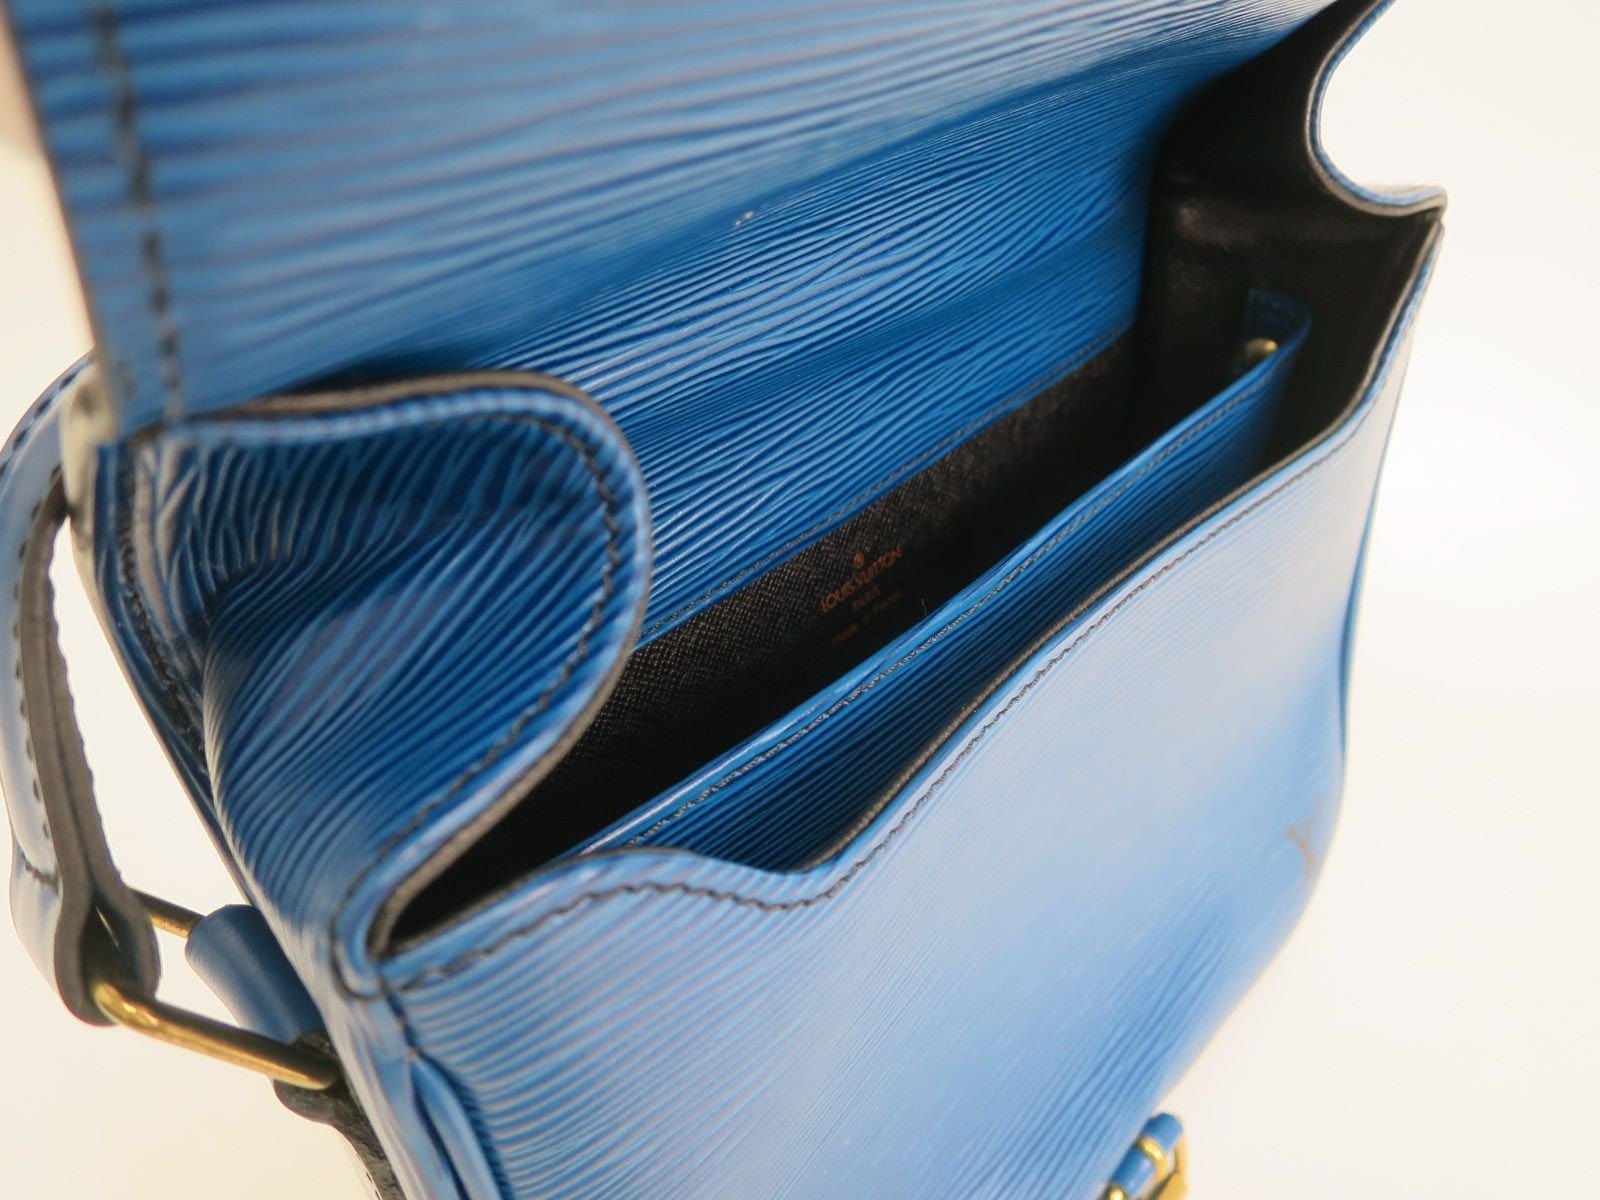 Louis Vuitton Toledo Blue Epi Leather Vintage Sac Triangle Bag Louis Vuitton